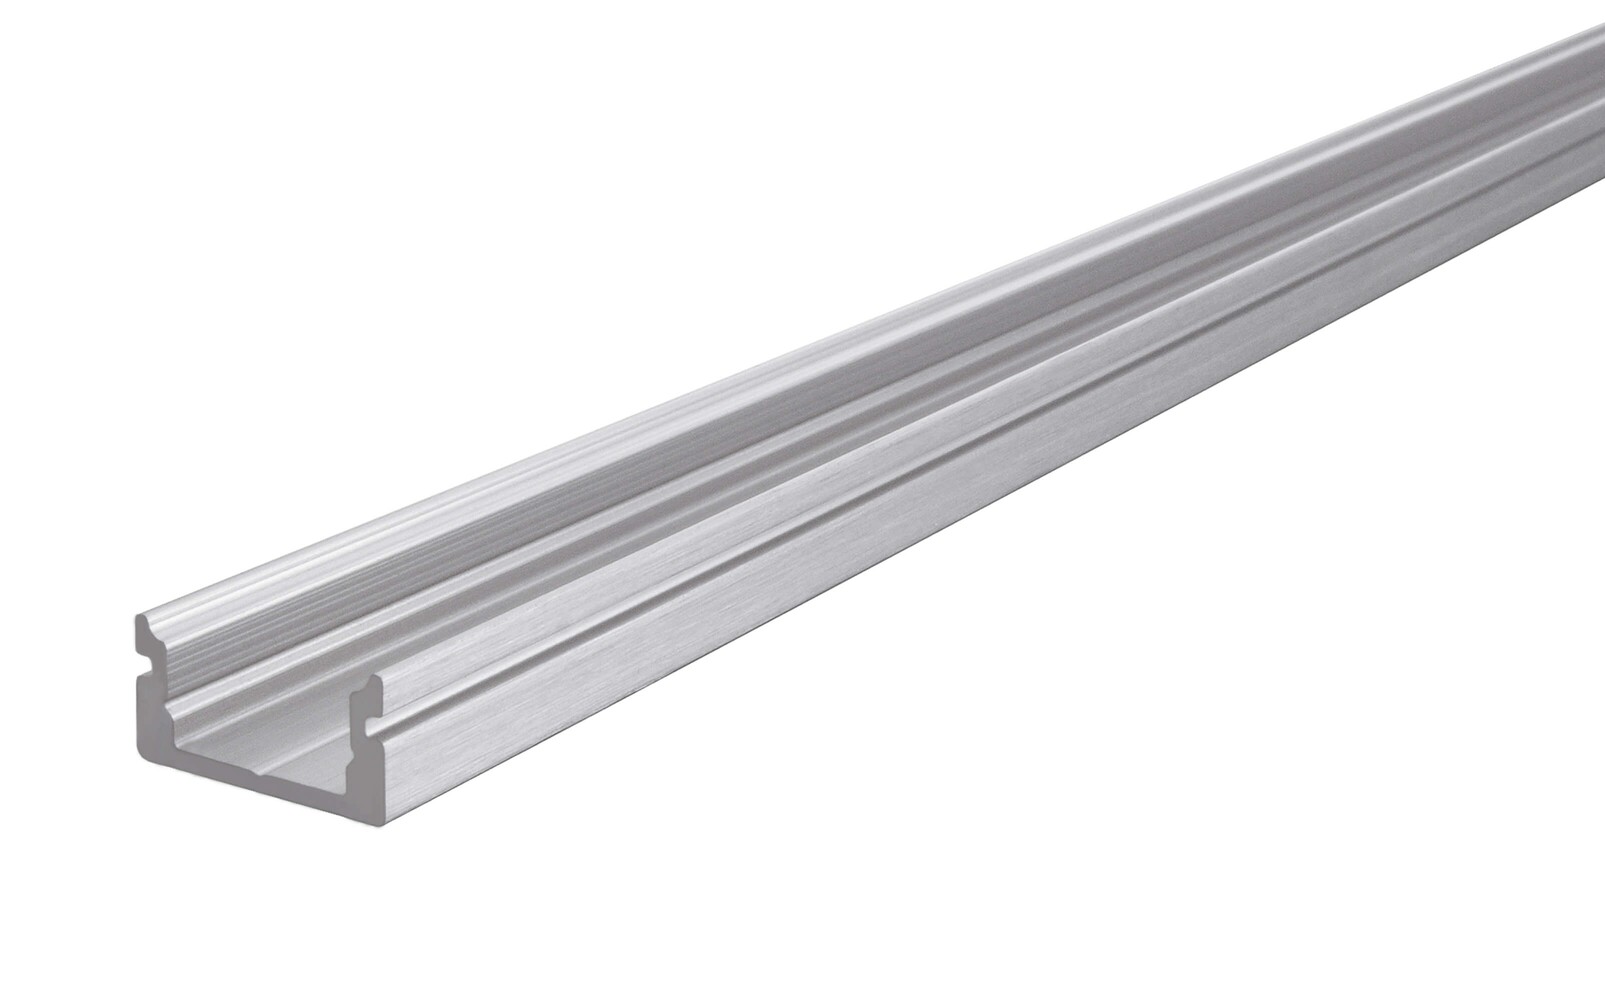 Deko-Light Silber matt eloxiertes LED Profil in flacher Form für LED Stripes